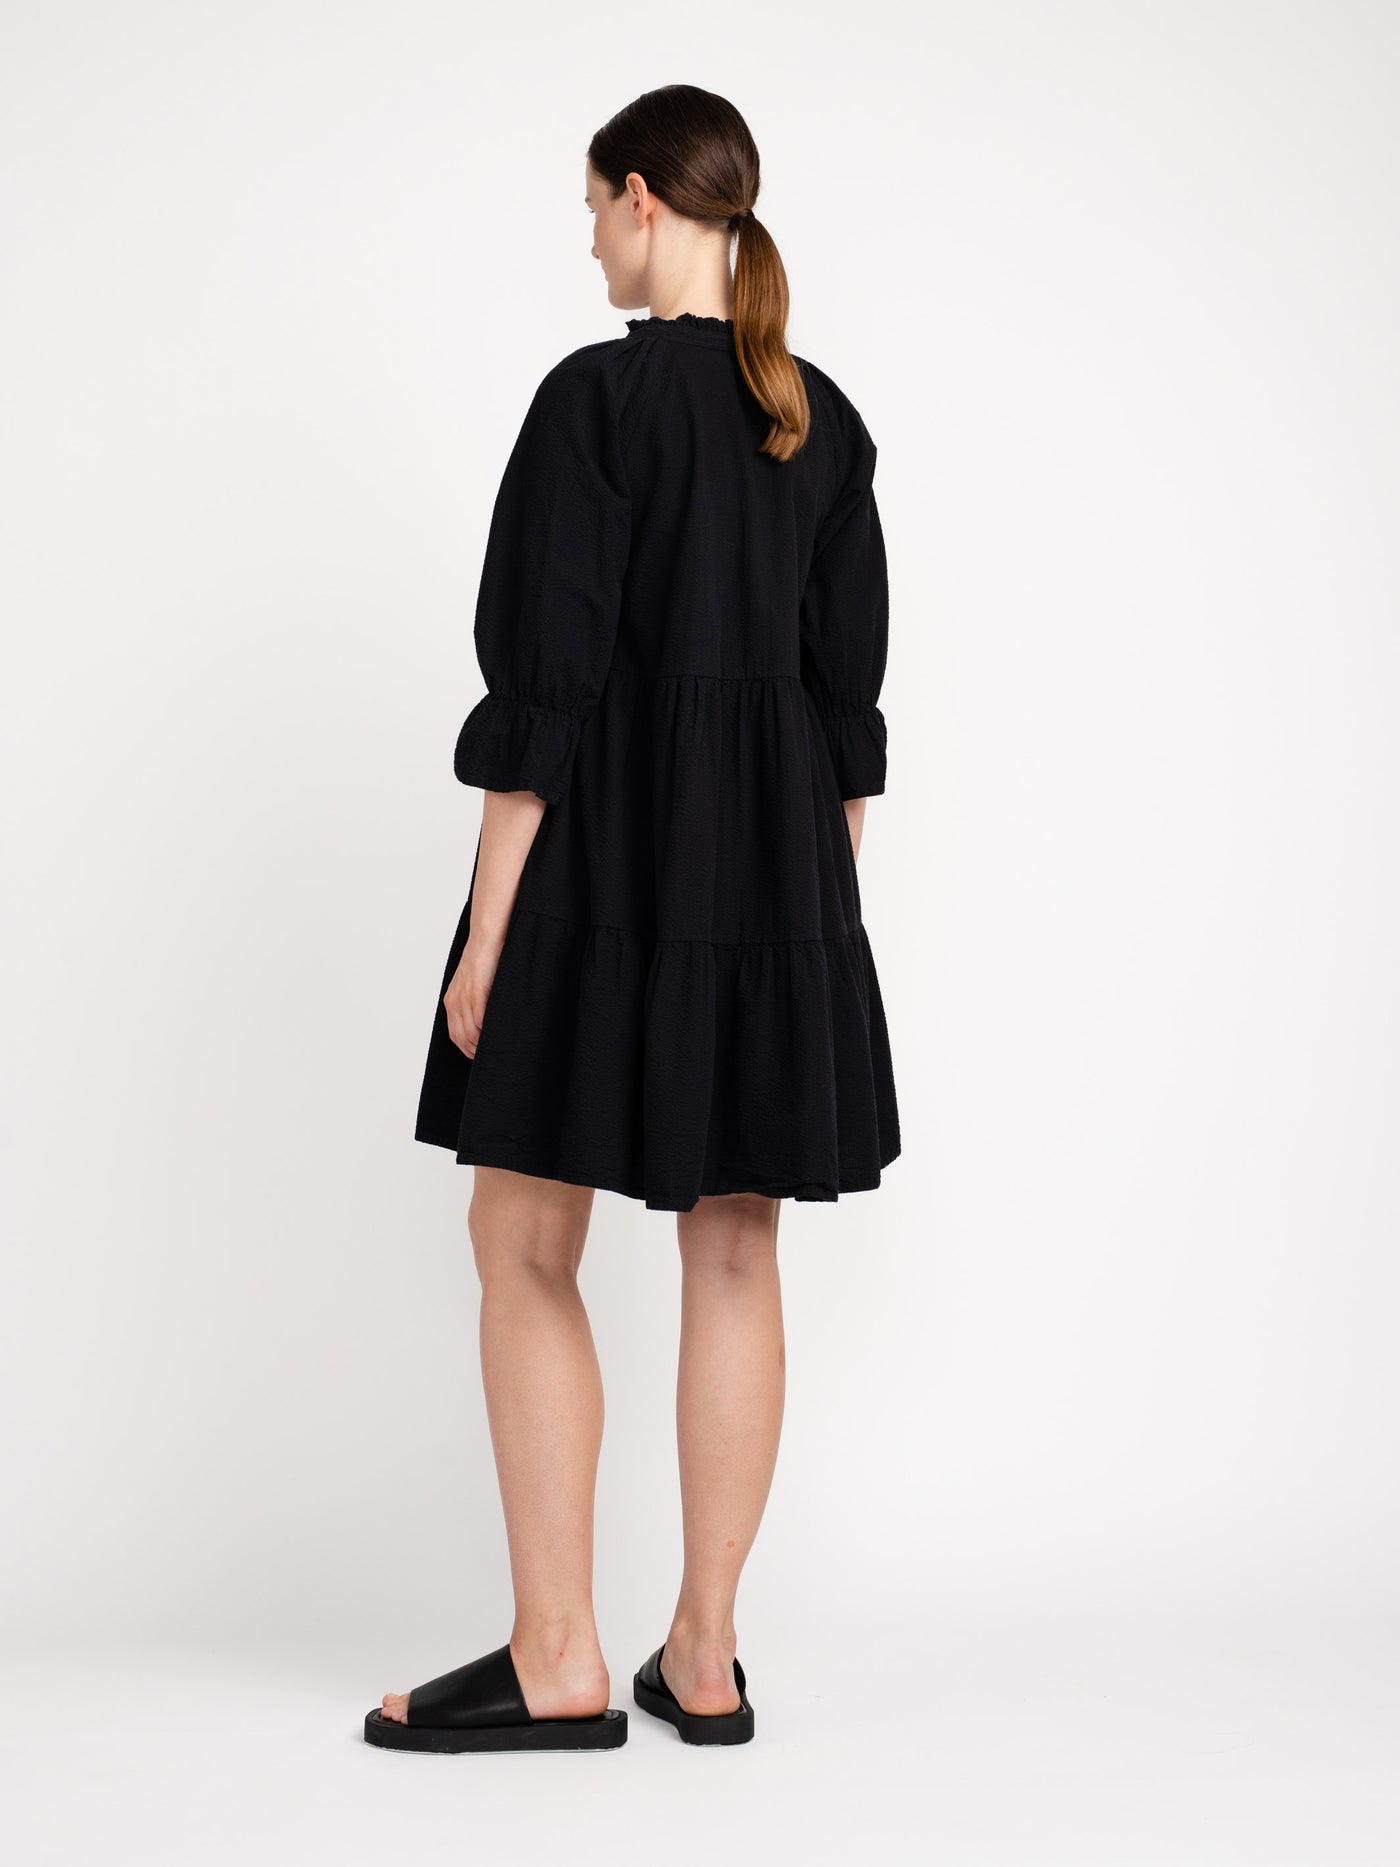 Ruffled dress, black